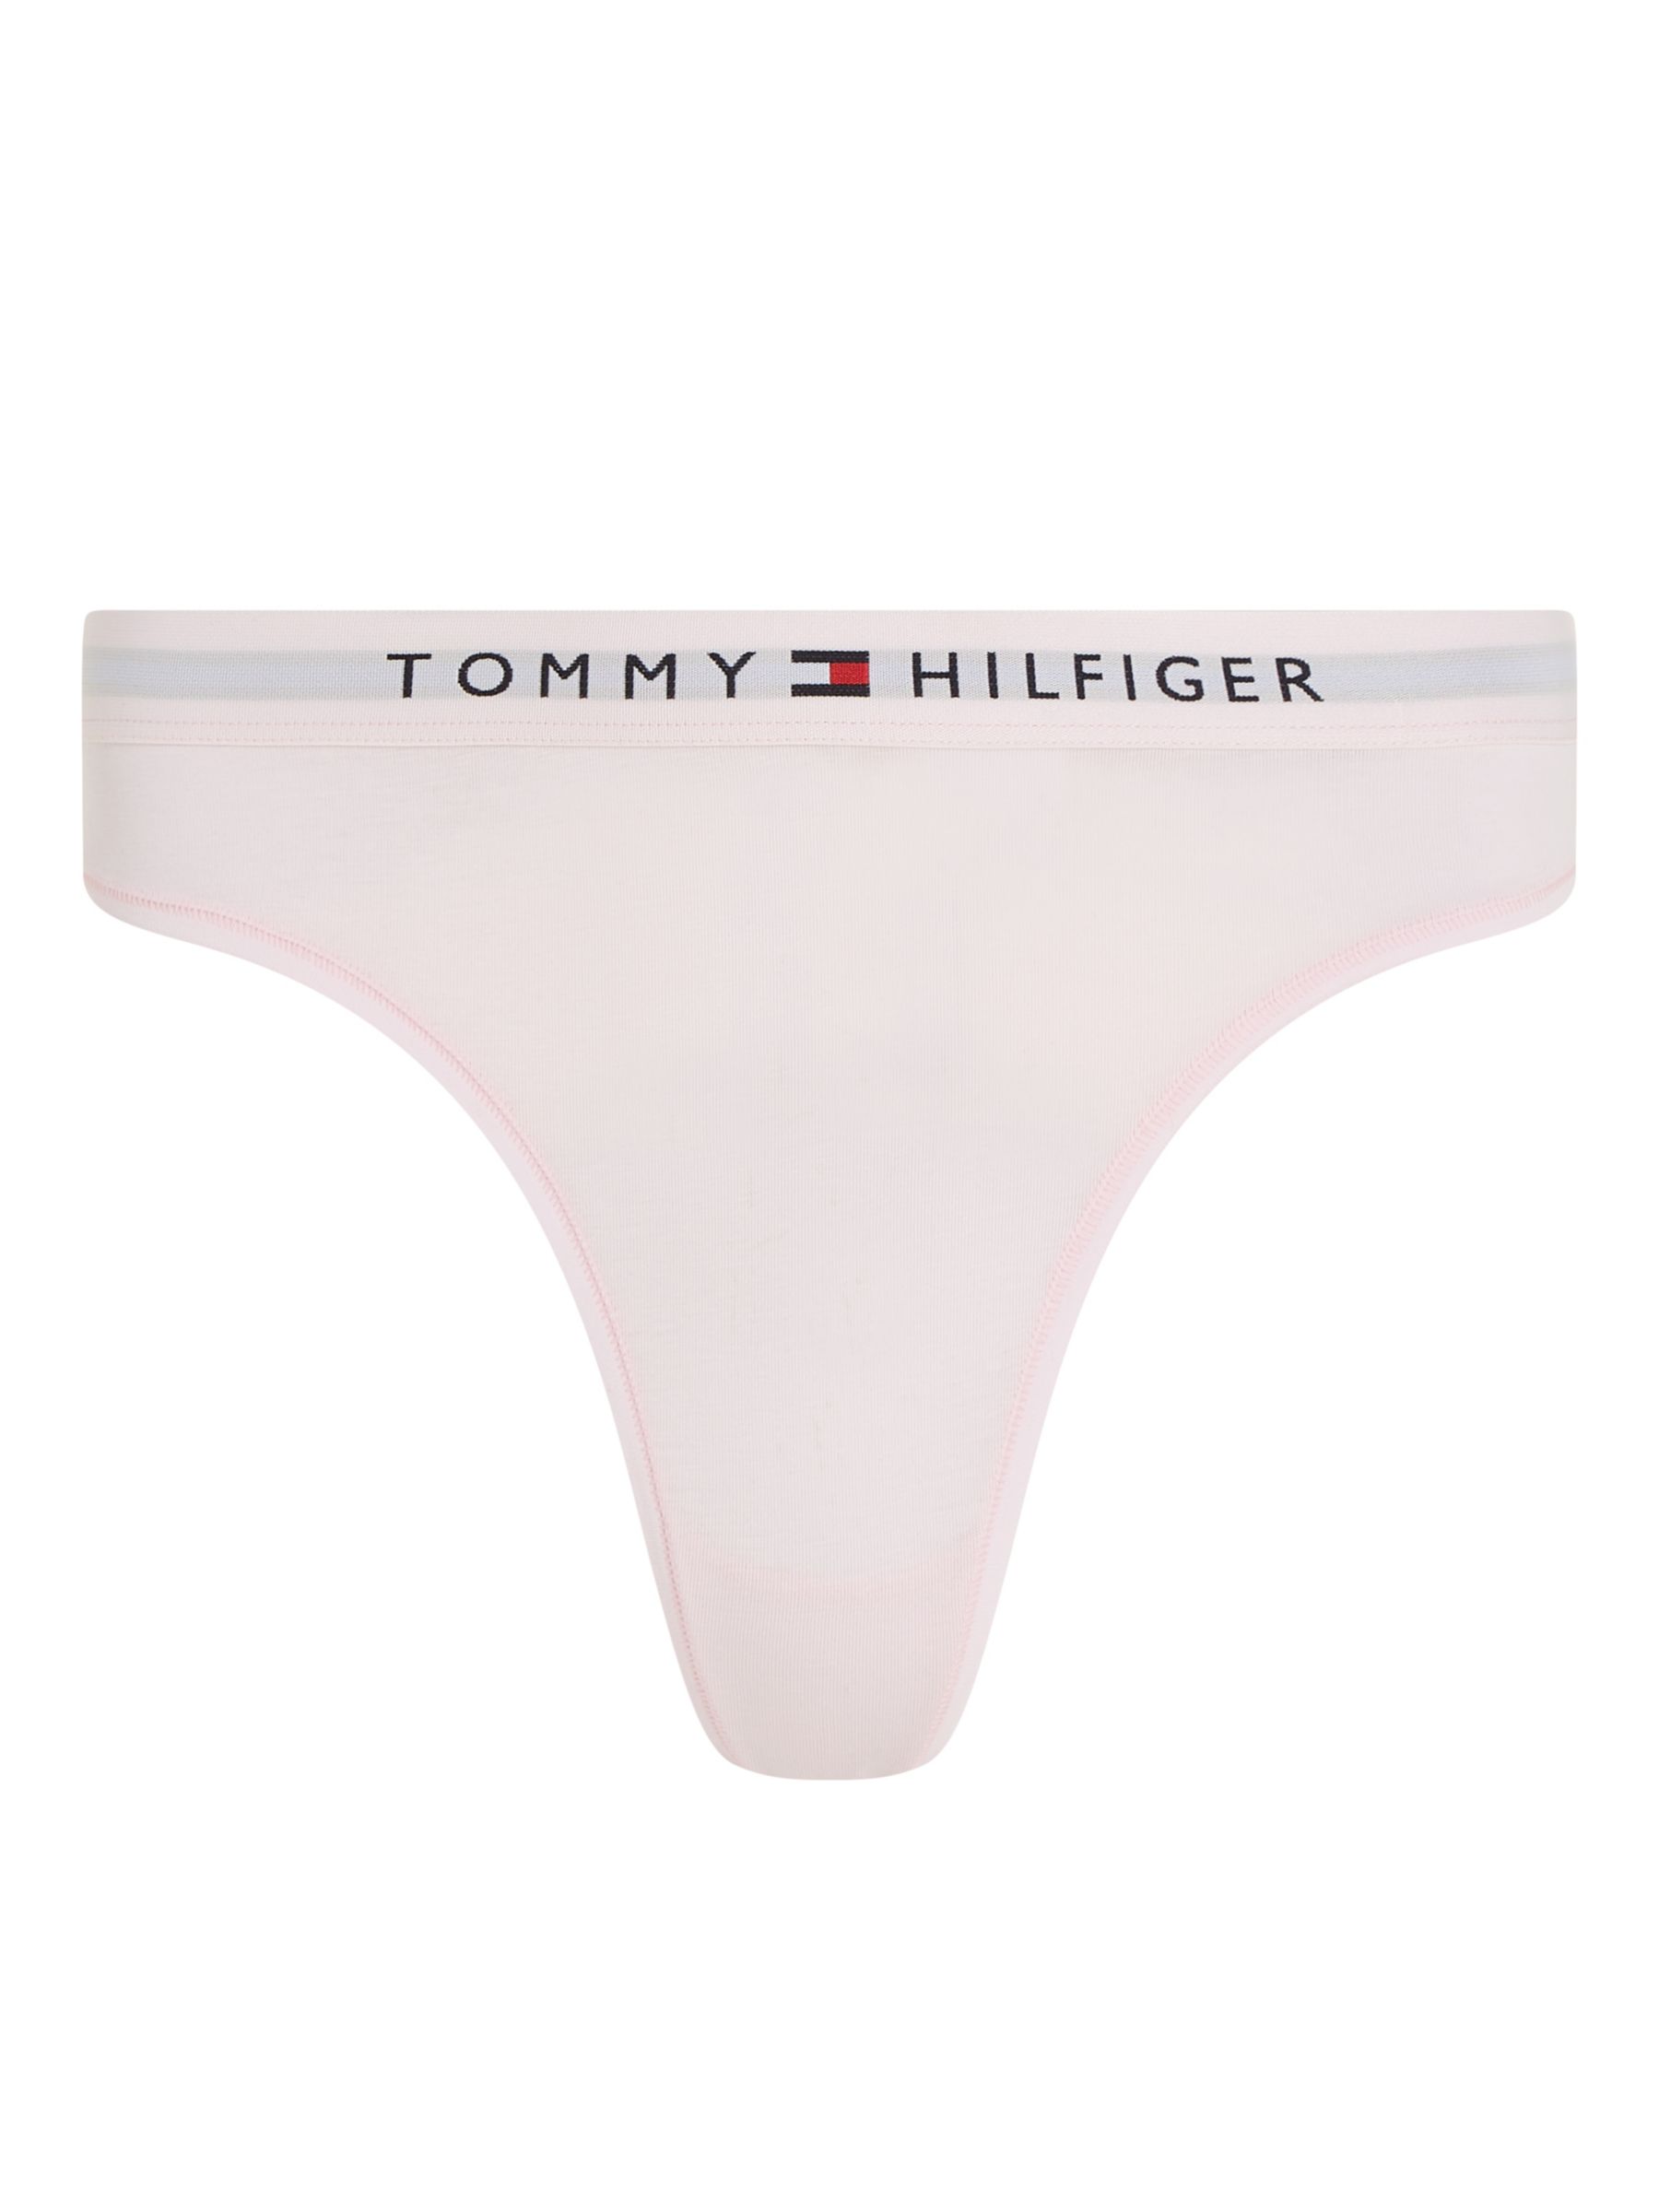 Tommy Hilfiger Logo Waistband Thong, Light Pink at John Lewis & Partners